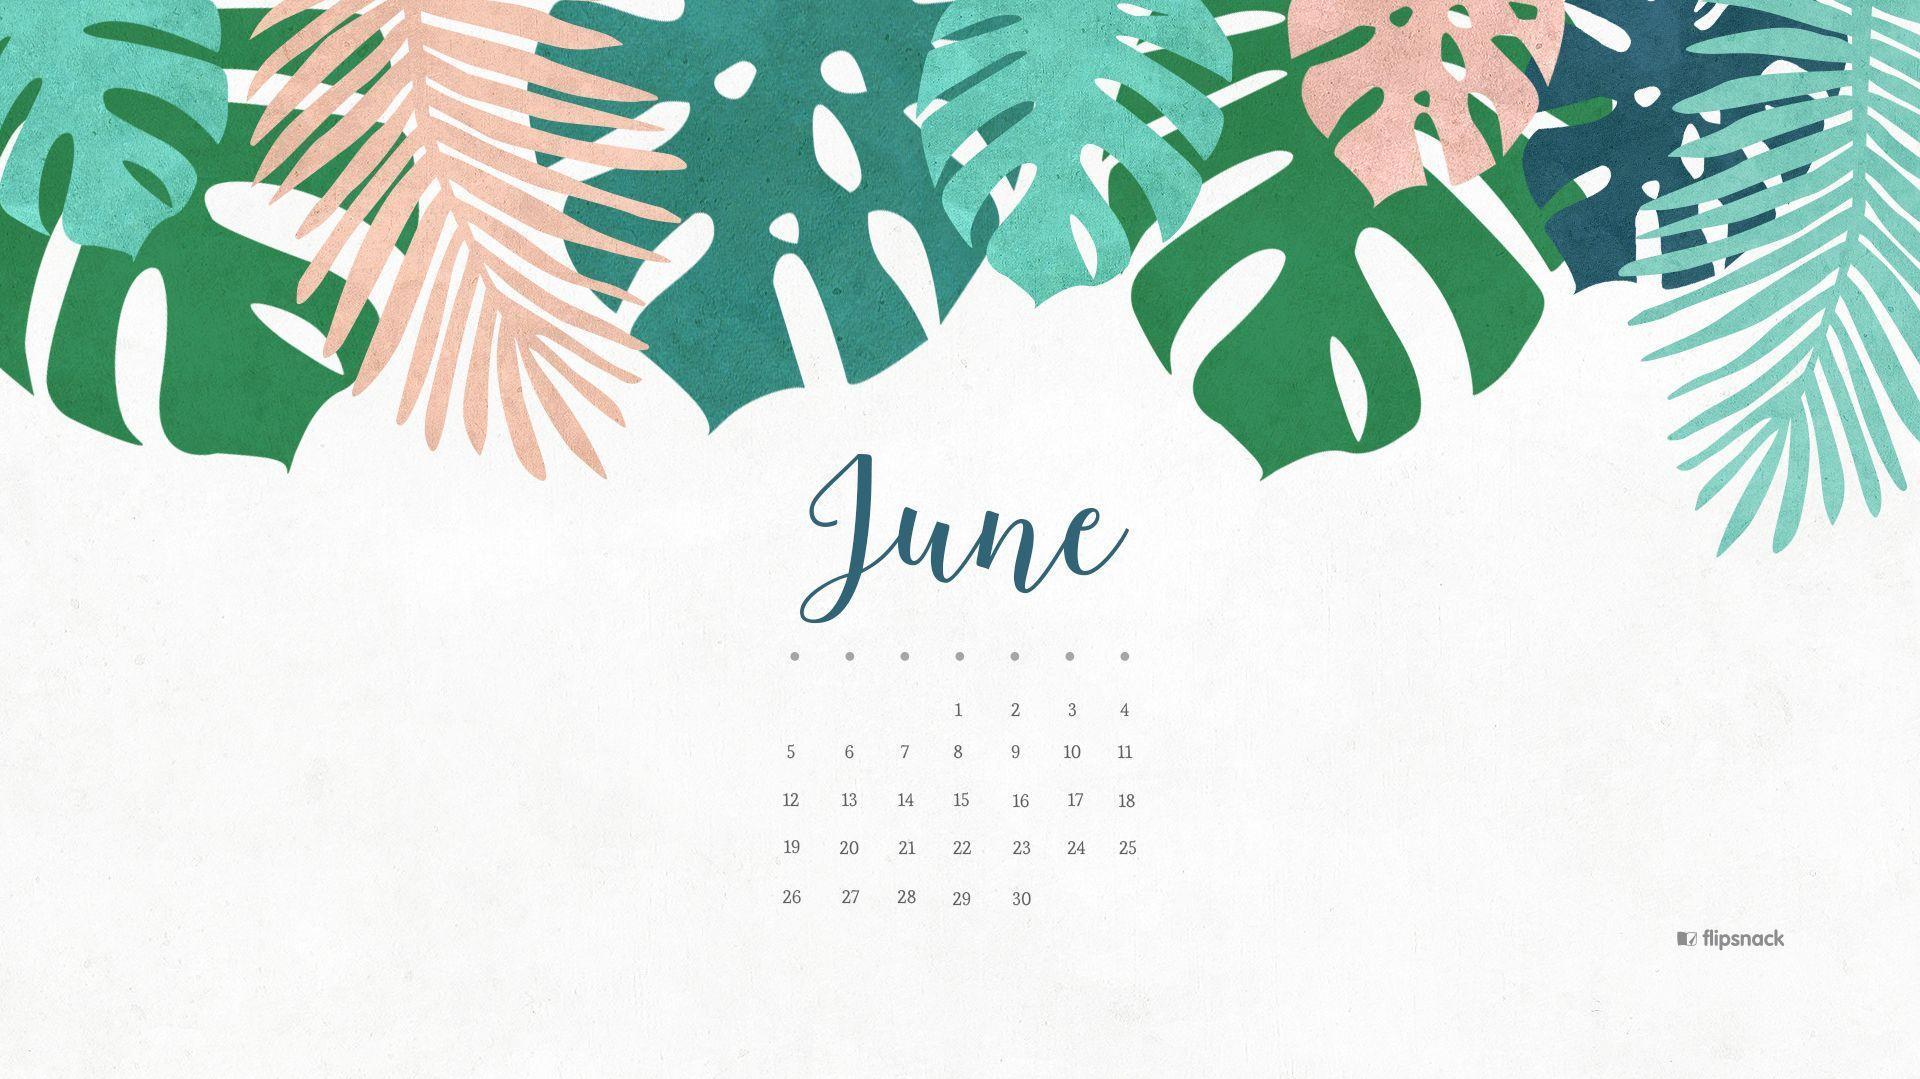 June 2016 free calendar wallpaper